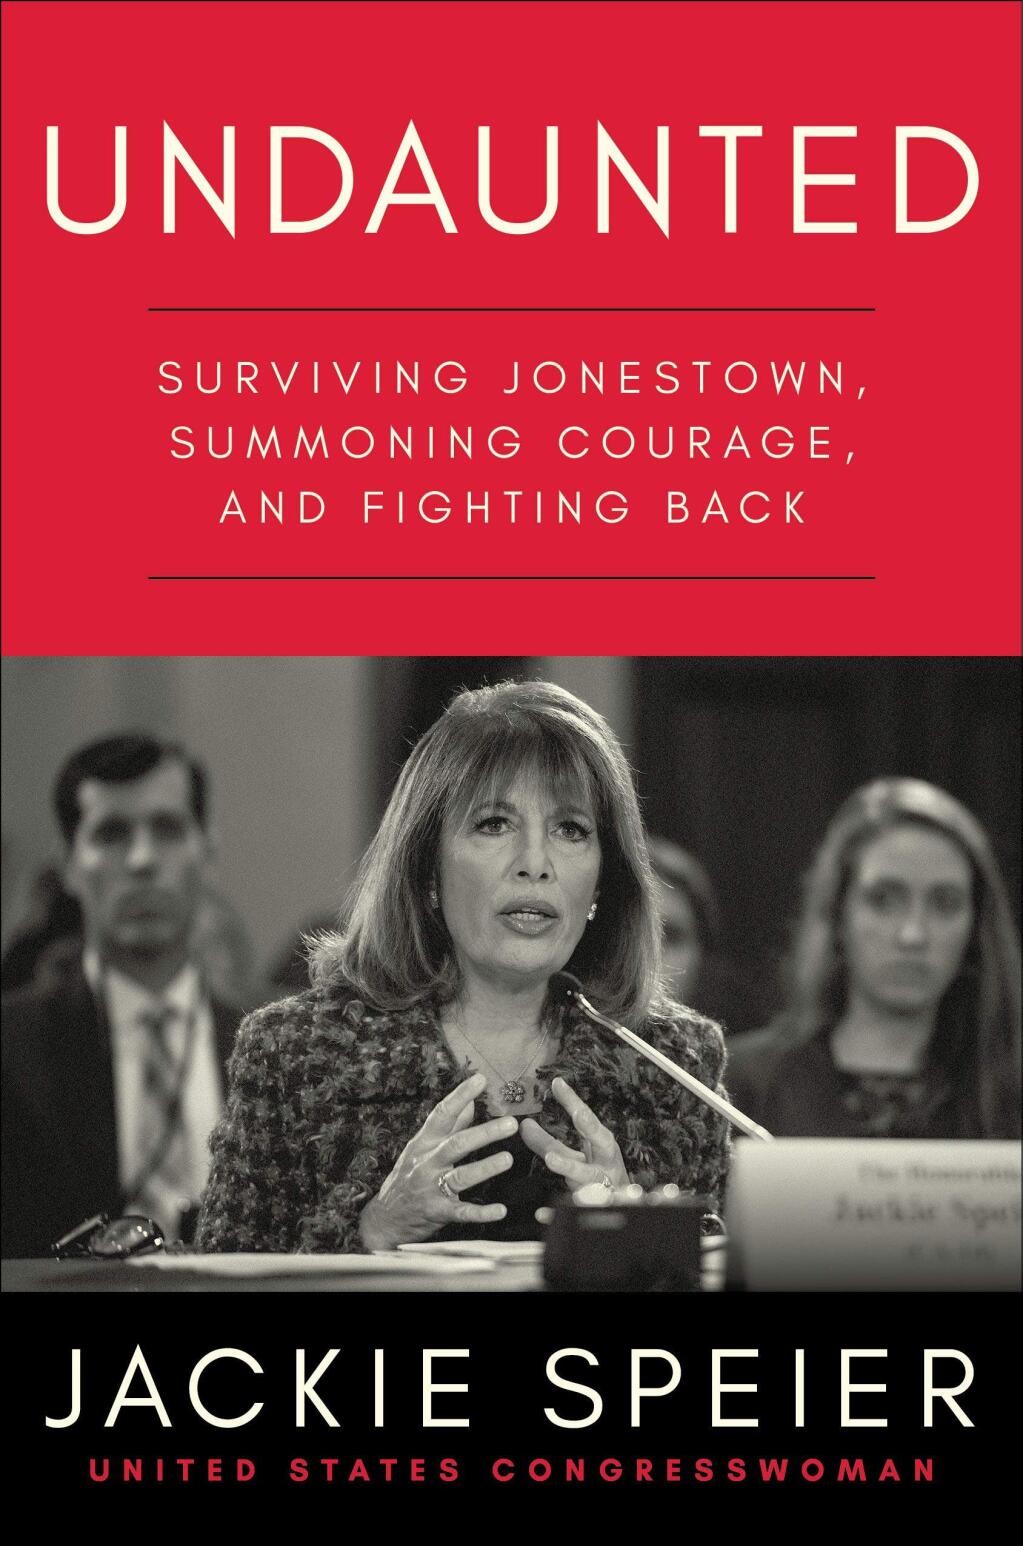 SURVIVOR: Congresswoman Jackie Speier's riveting memoir is No. 1 on this week's Fiction and Nonfiction List.